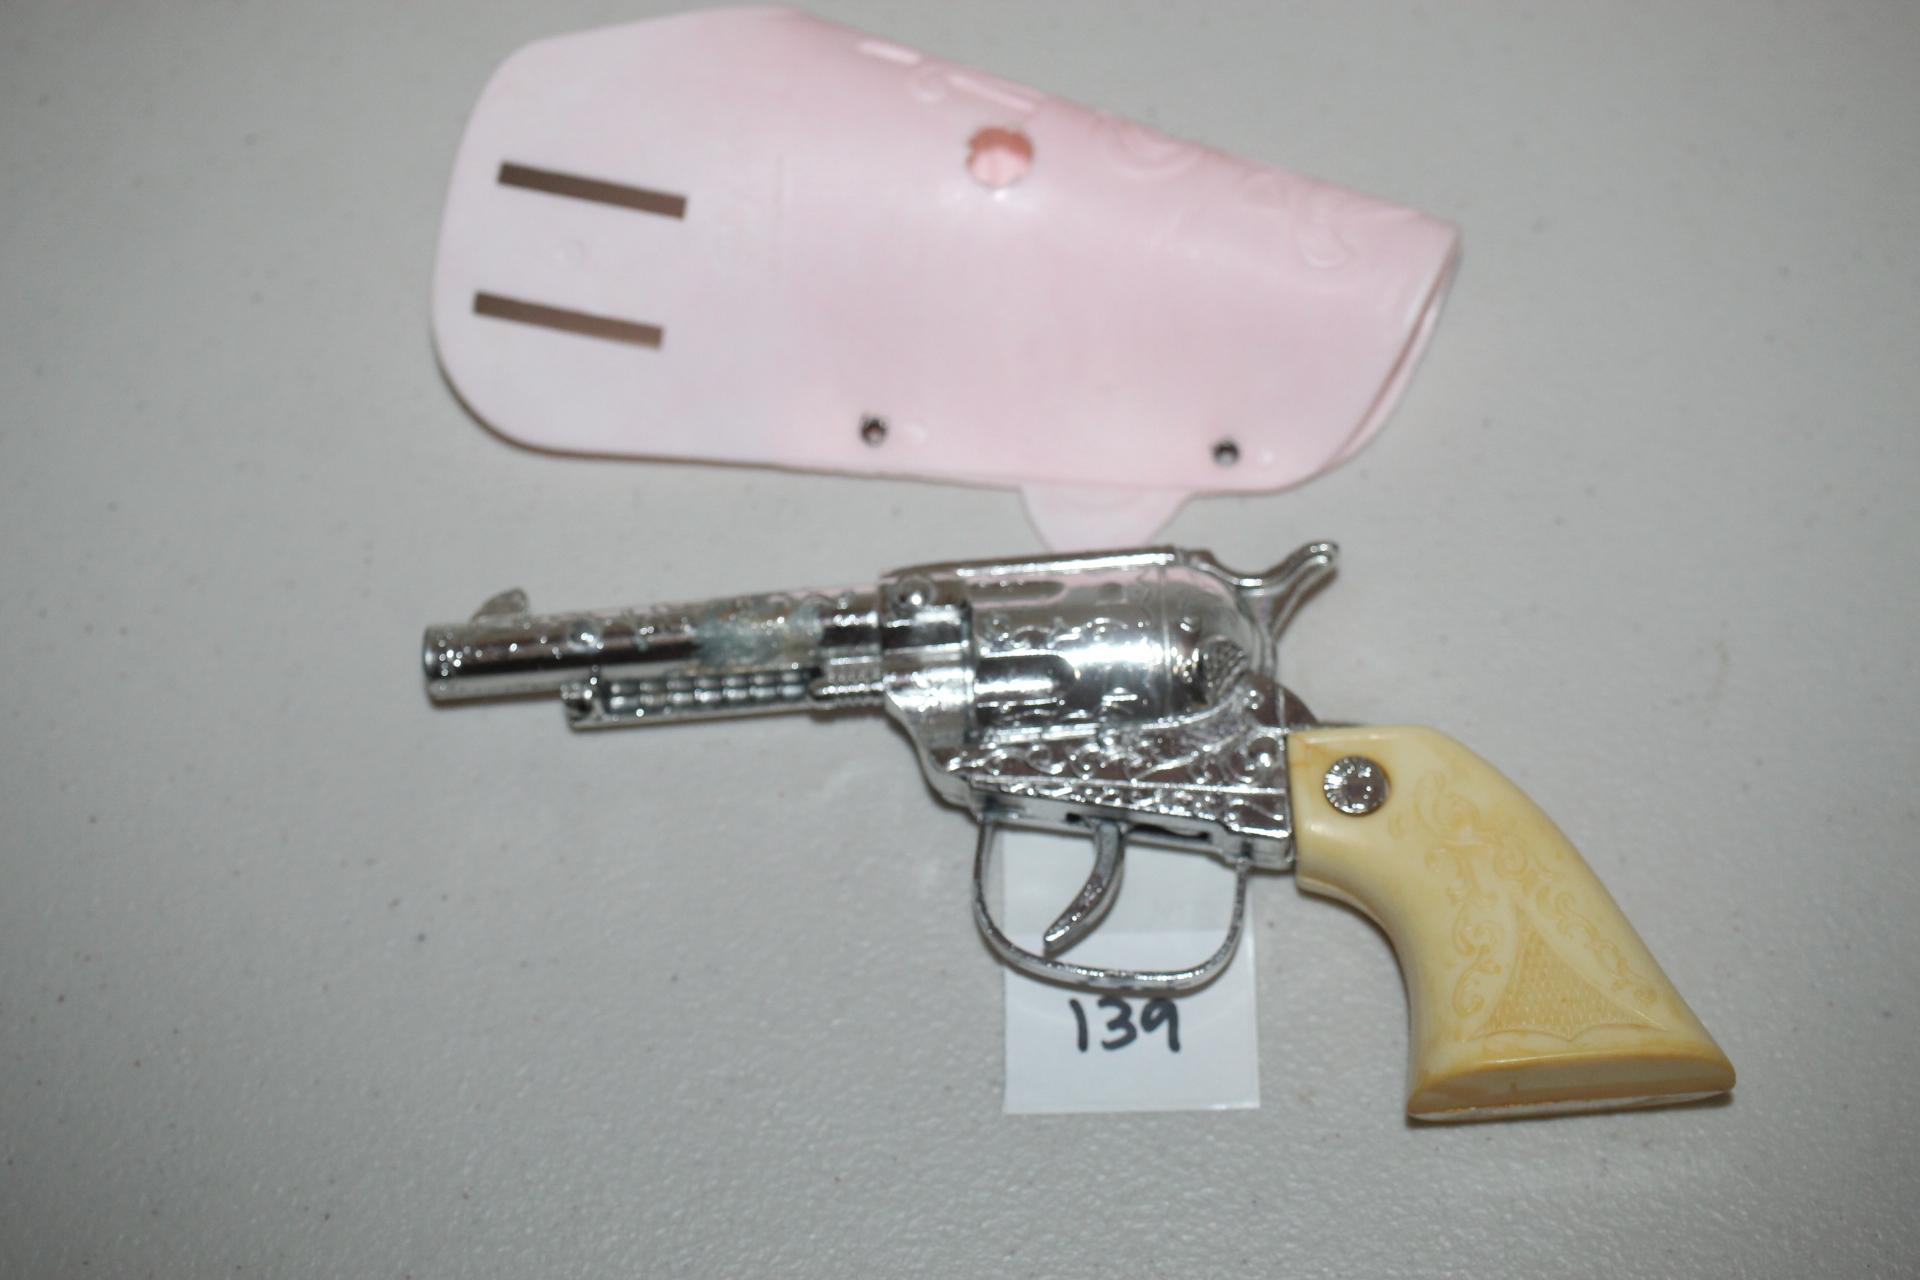 Toy Cap Gun With Holster